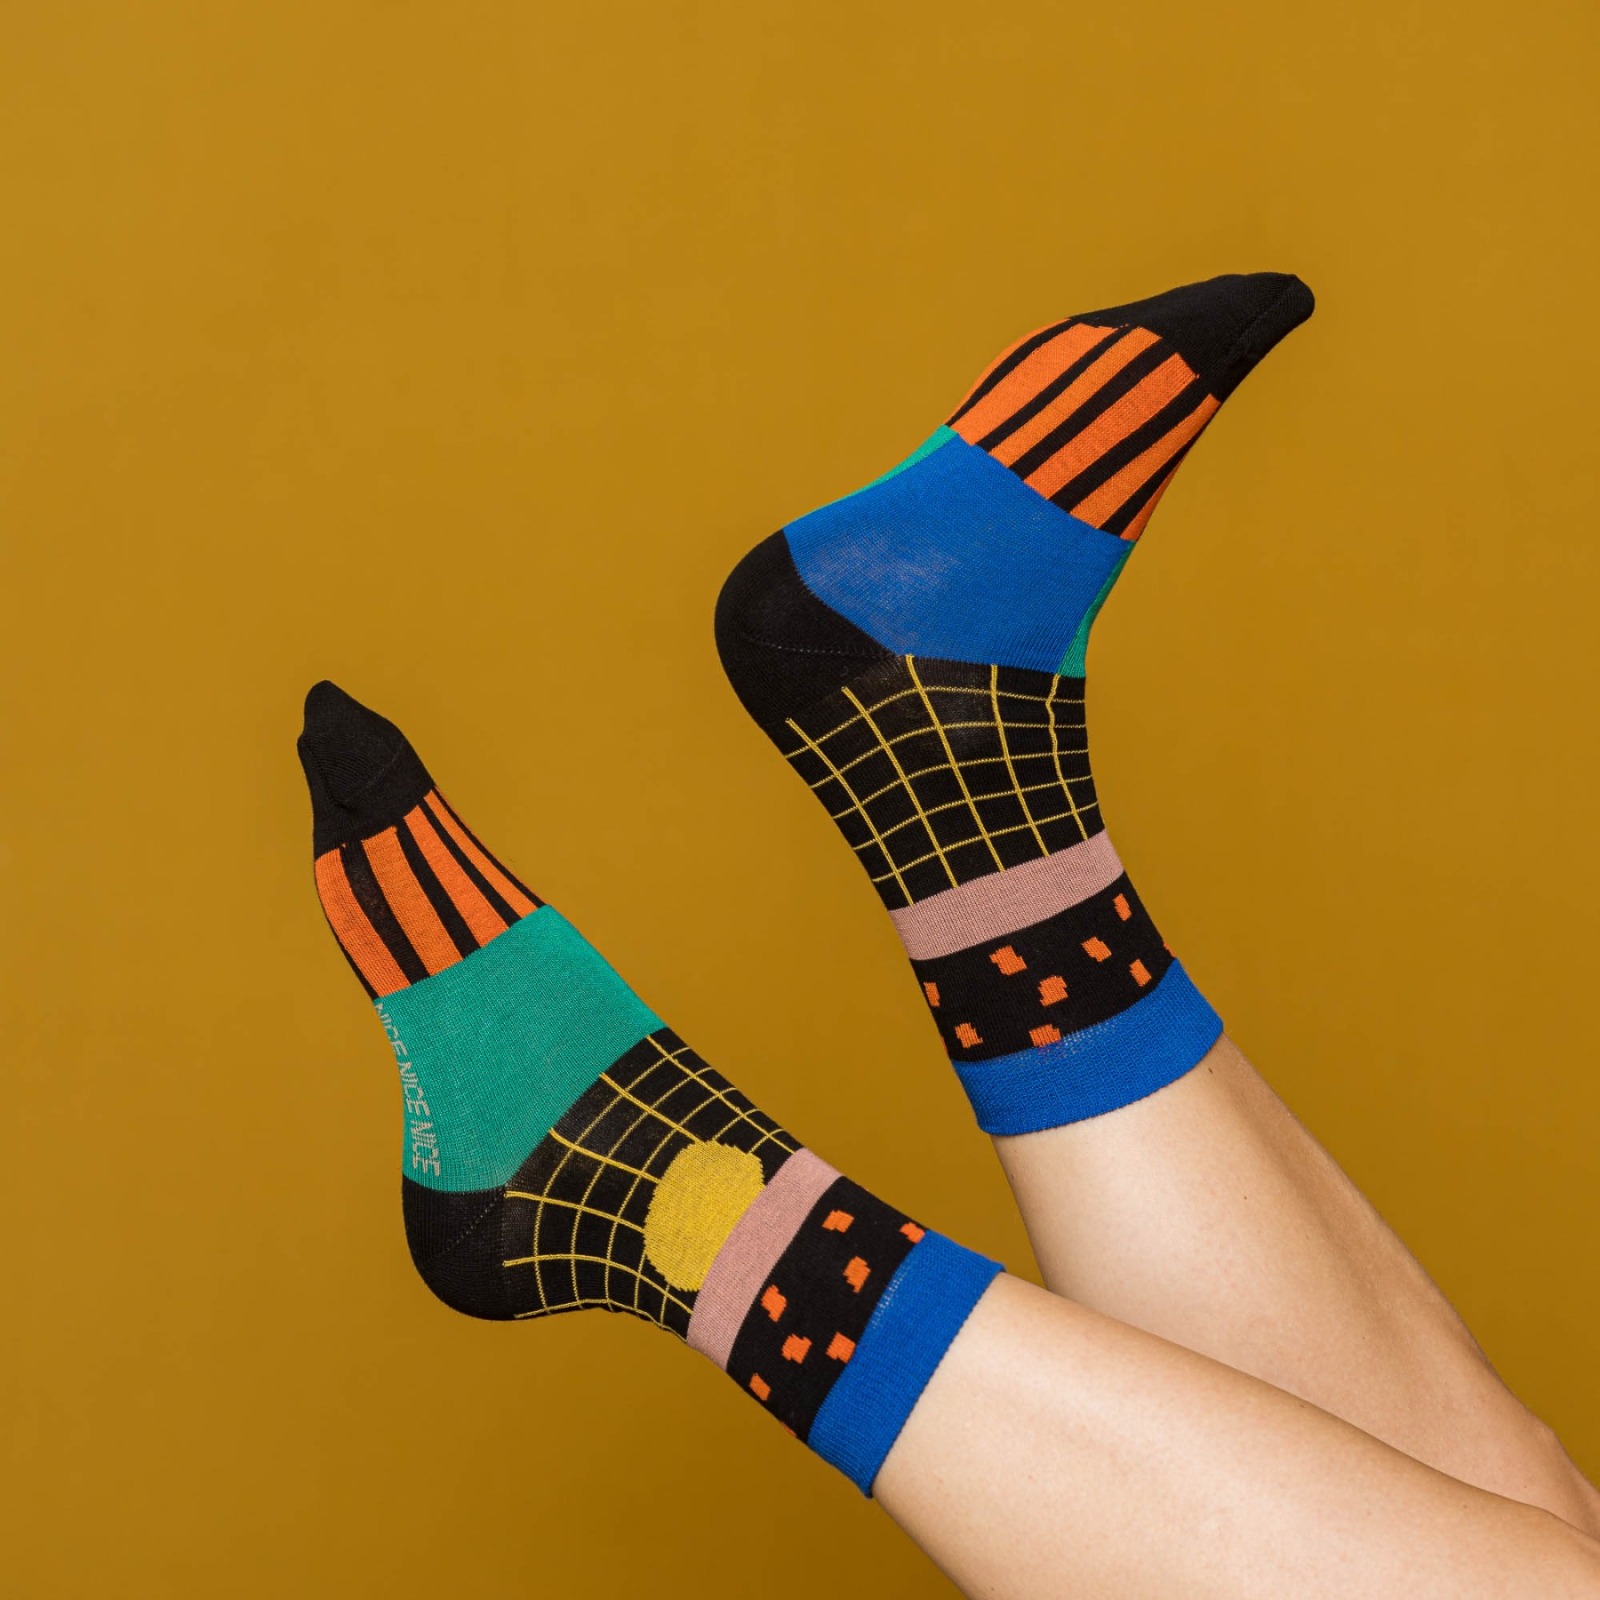 nicenicenice - nice socks pattern black